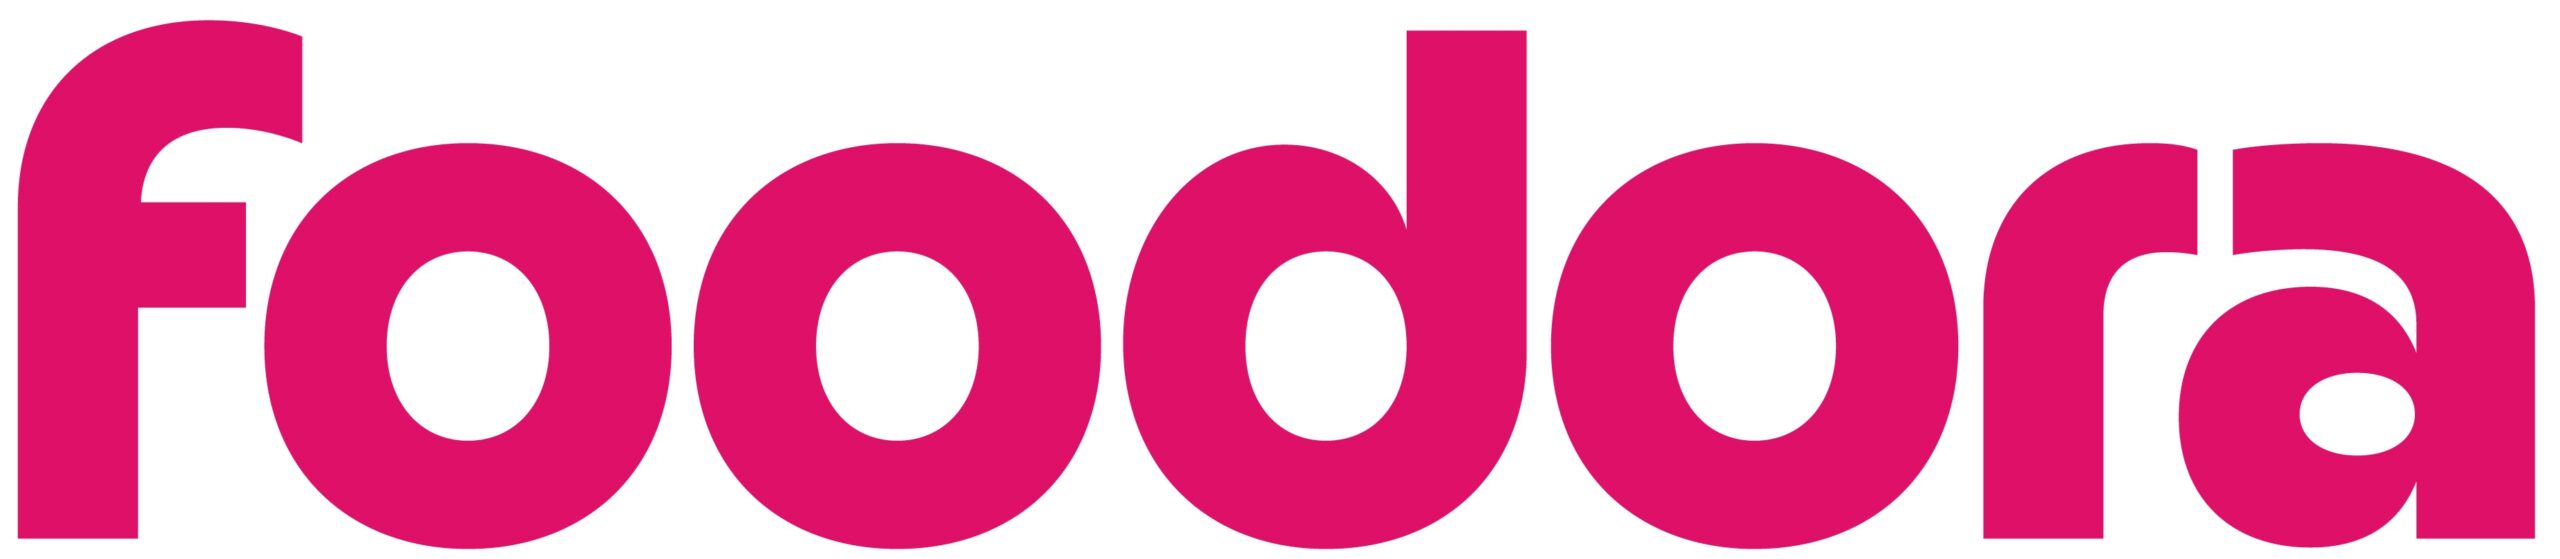 Foodora_Logo zm